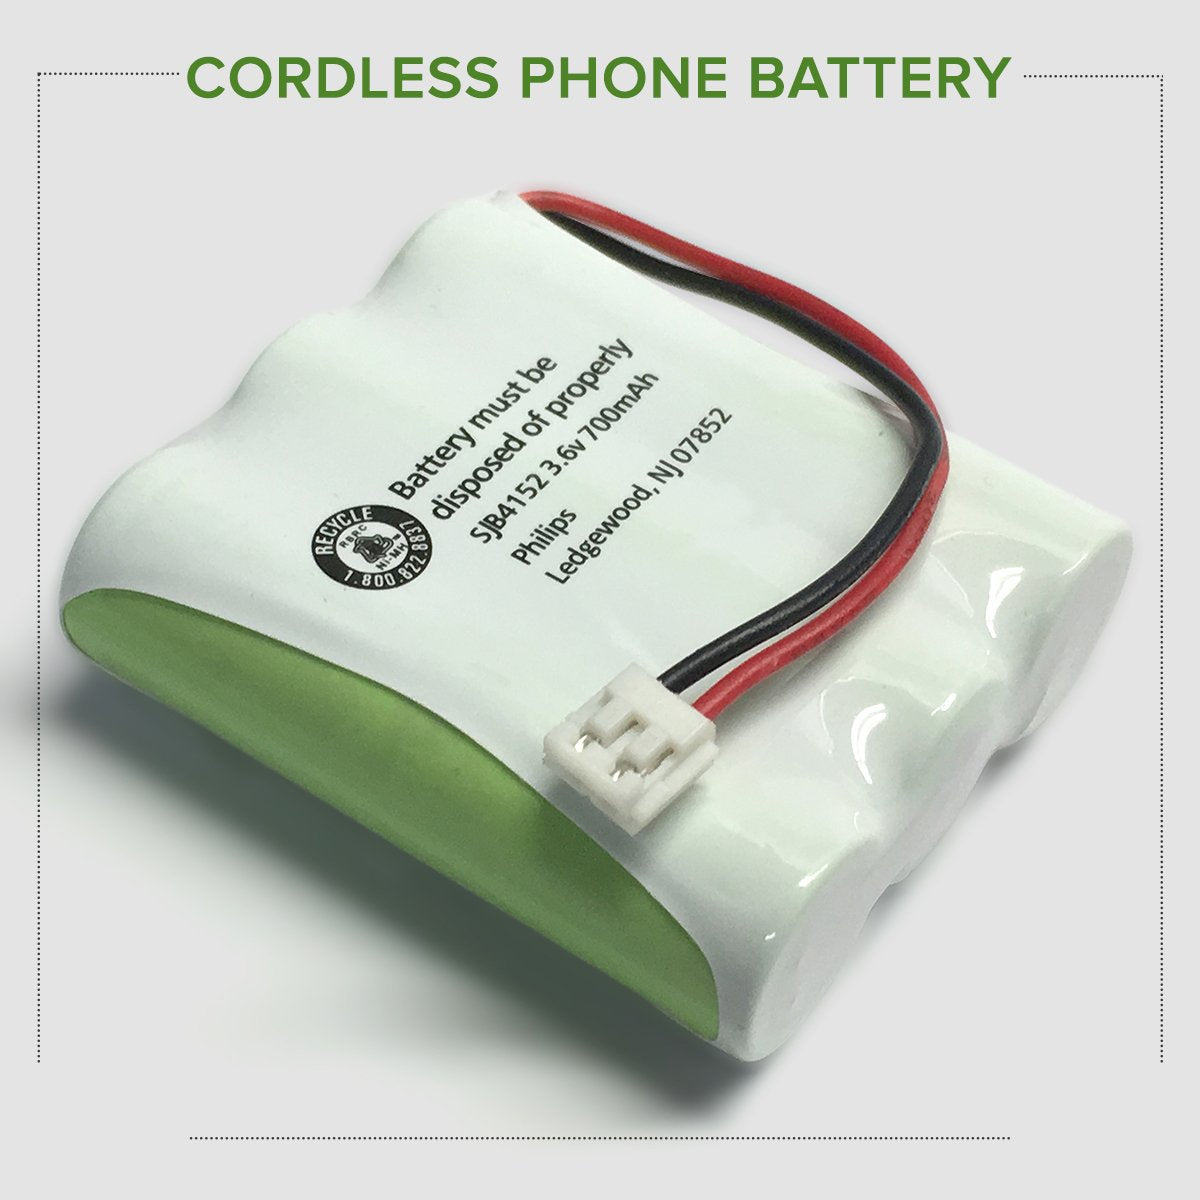 GE 2-5838 Cordless Phone Battery